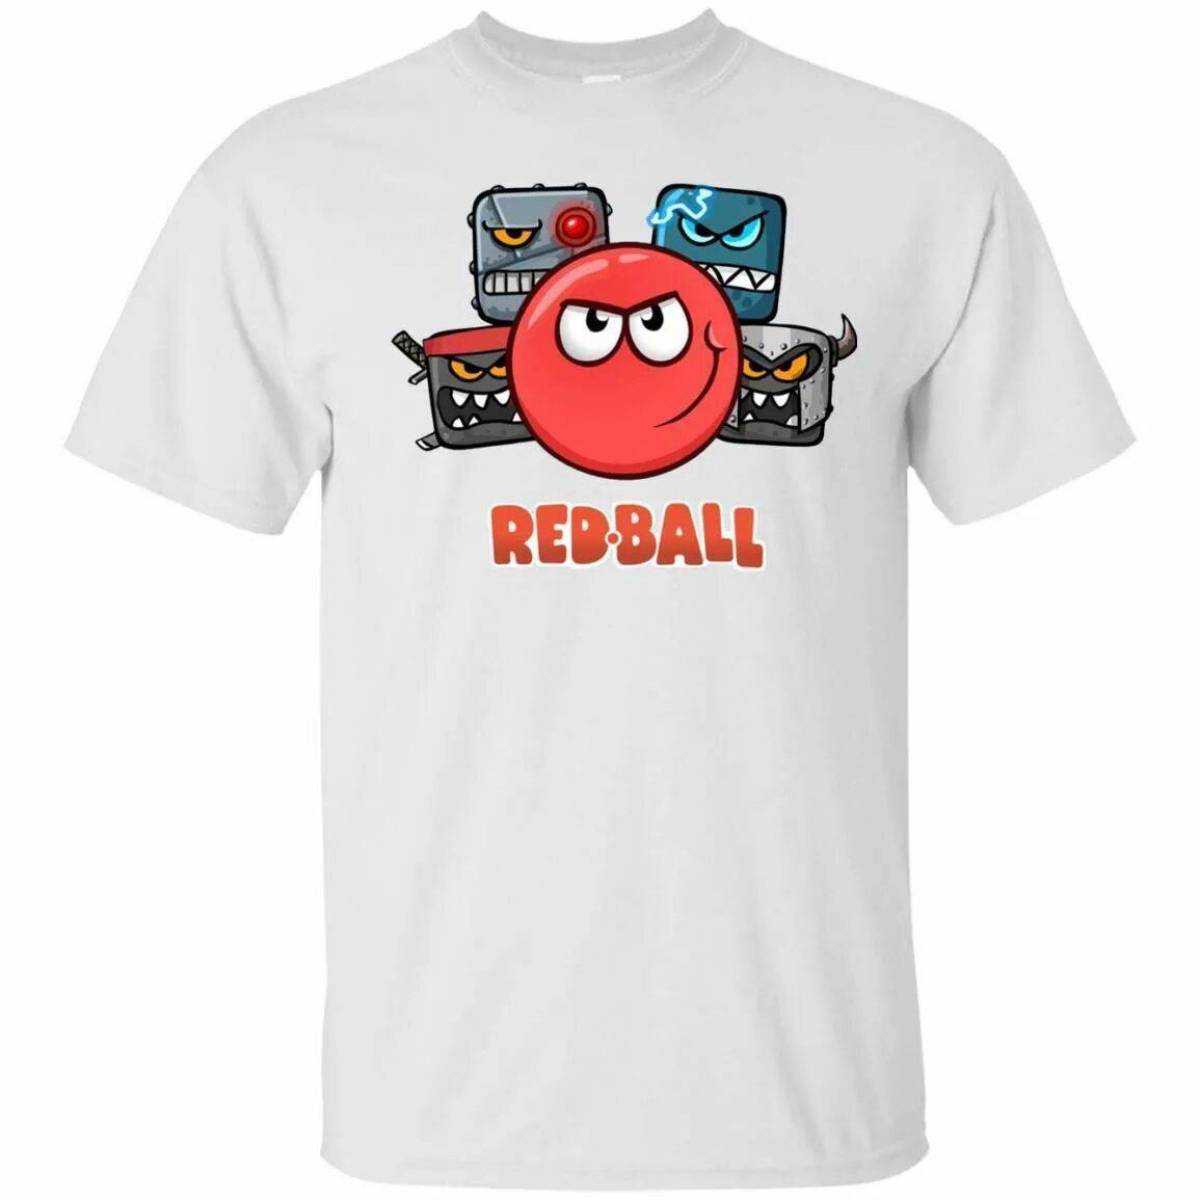 Футболка red ball. Футболки из игры Red Ball. Red Ball 4 футболка детская. Майка Red Ball 4. Йфудболка скраснм шарикам.